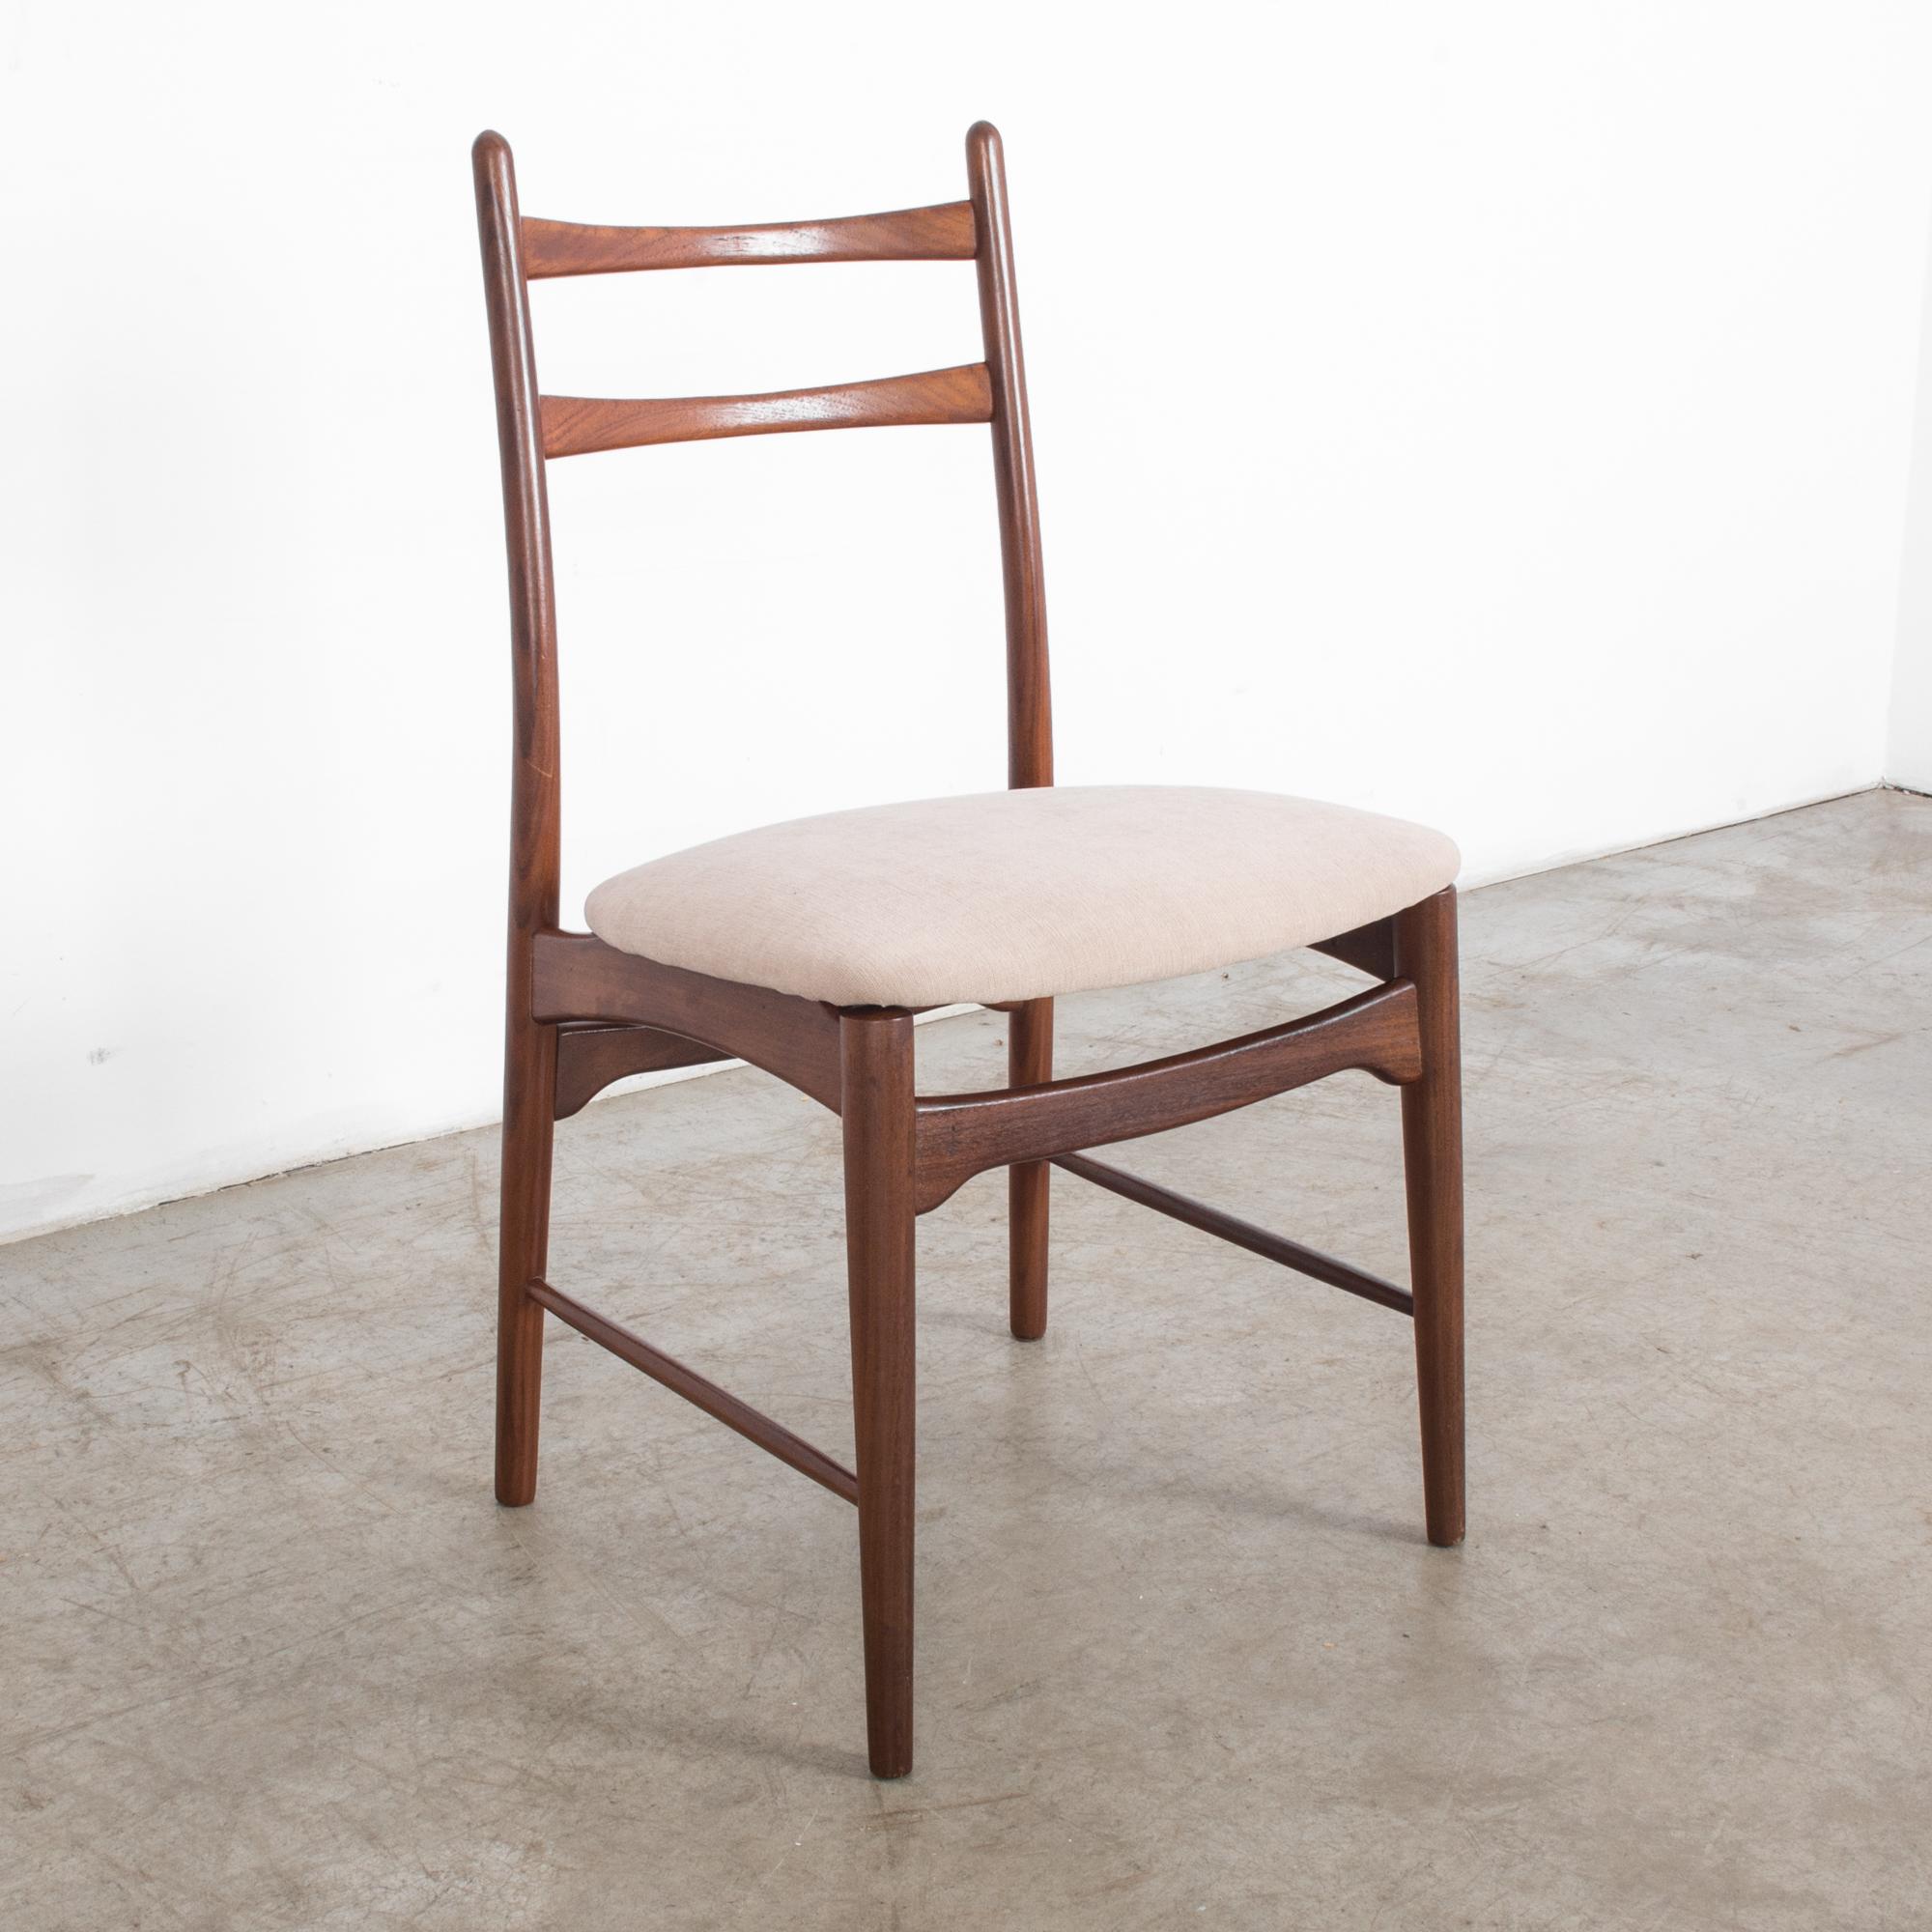 Mid-20th Century 1960s Danish Teak Chair For Sale